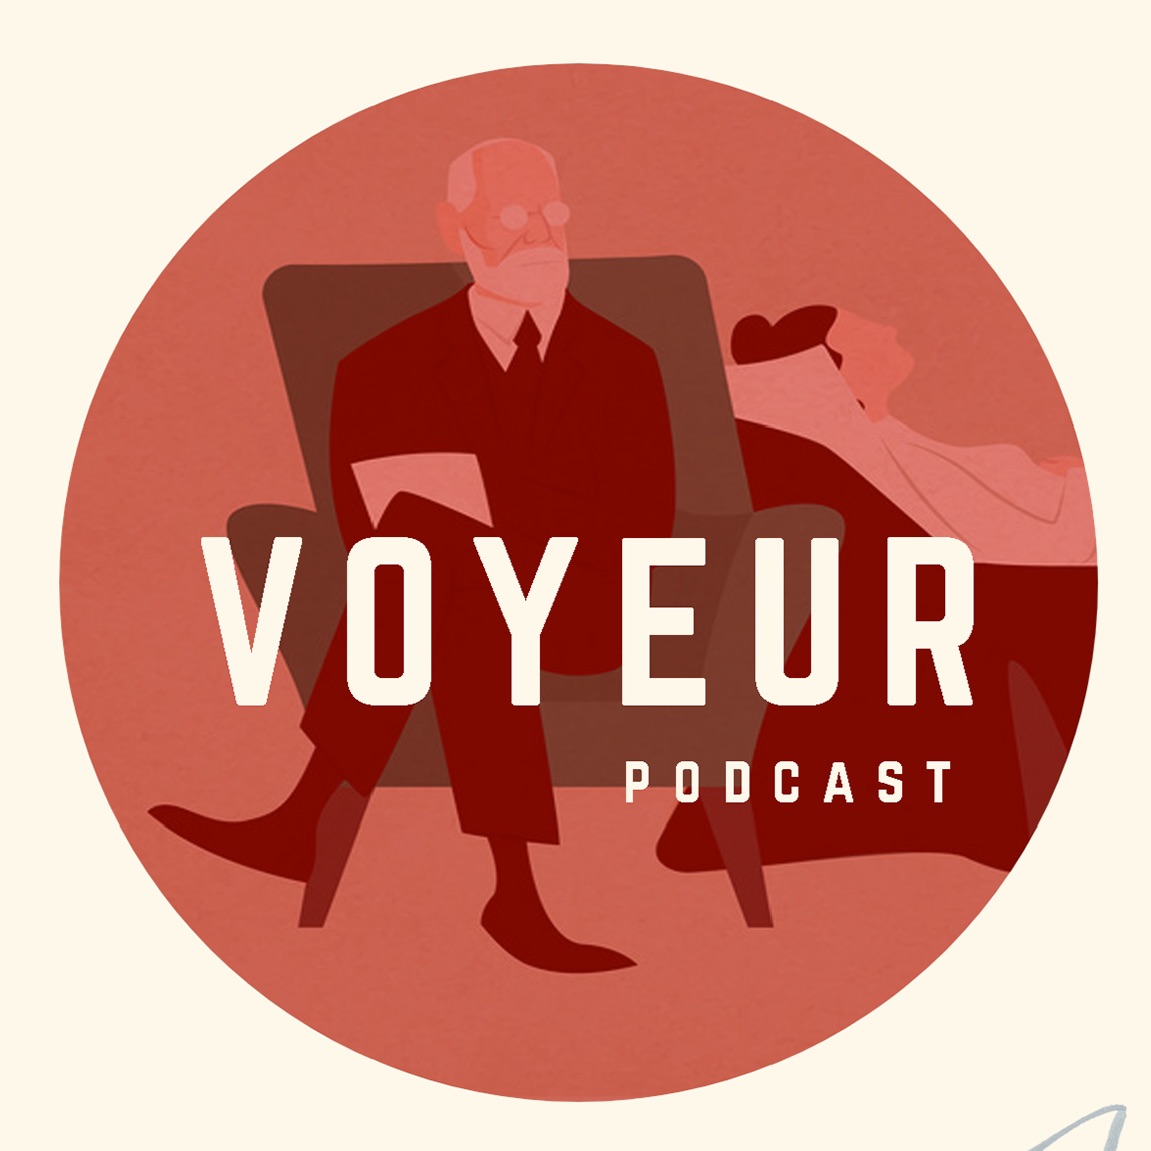 Voyeur Podcast